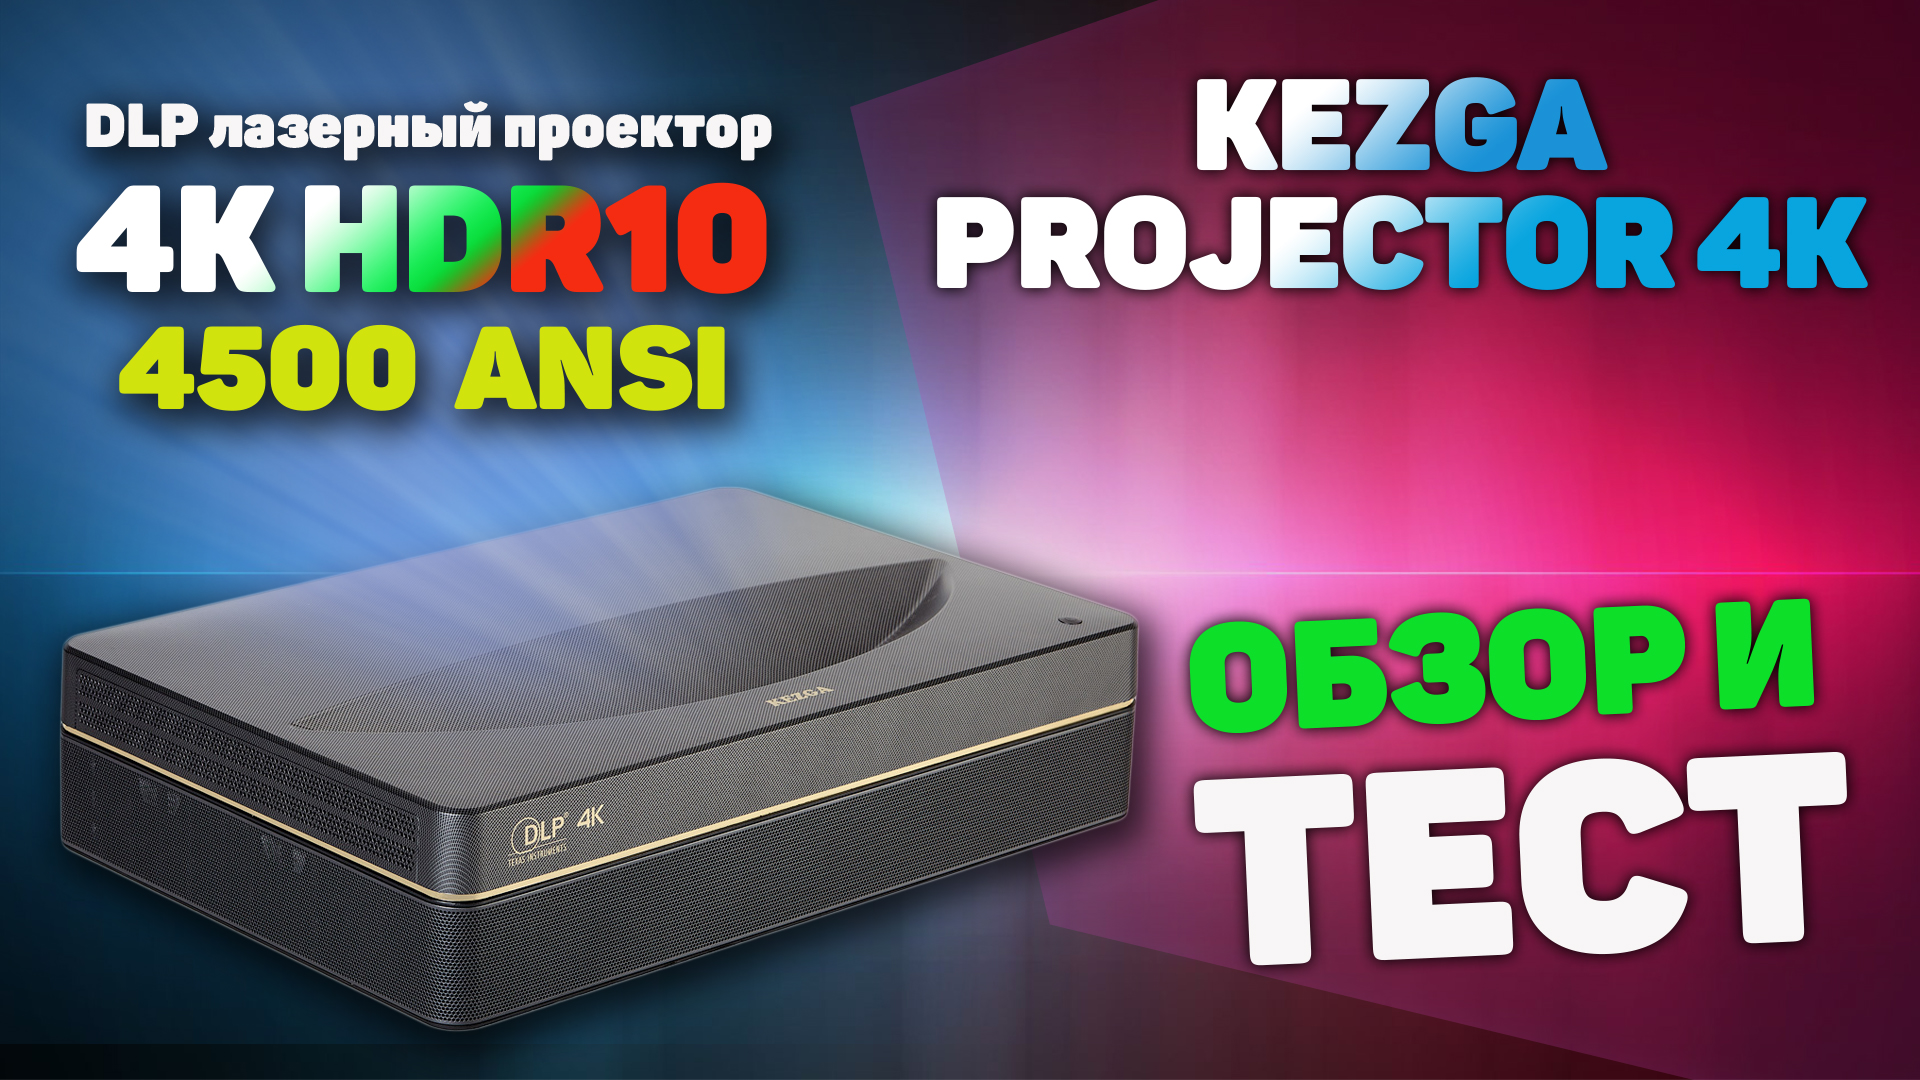 Мечта Киномана Kezga Projector 4K обзор Ультракороткофокусного DLP лазерного проектора.mp4